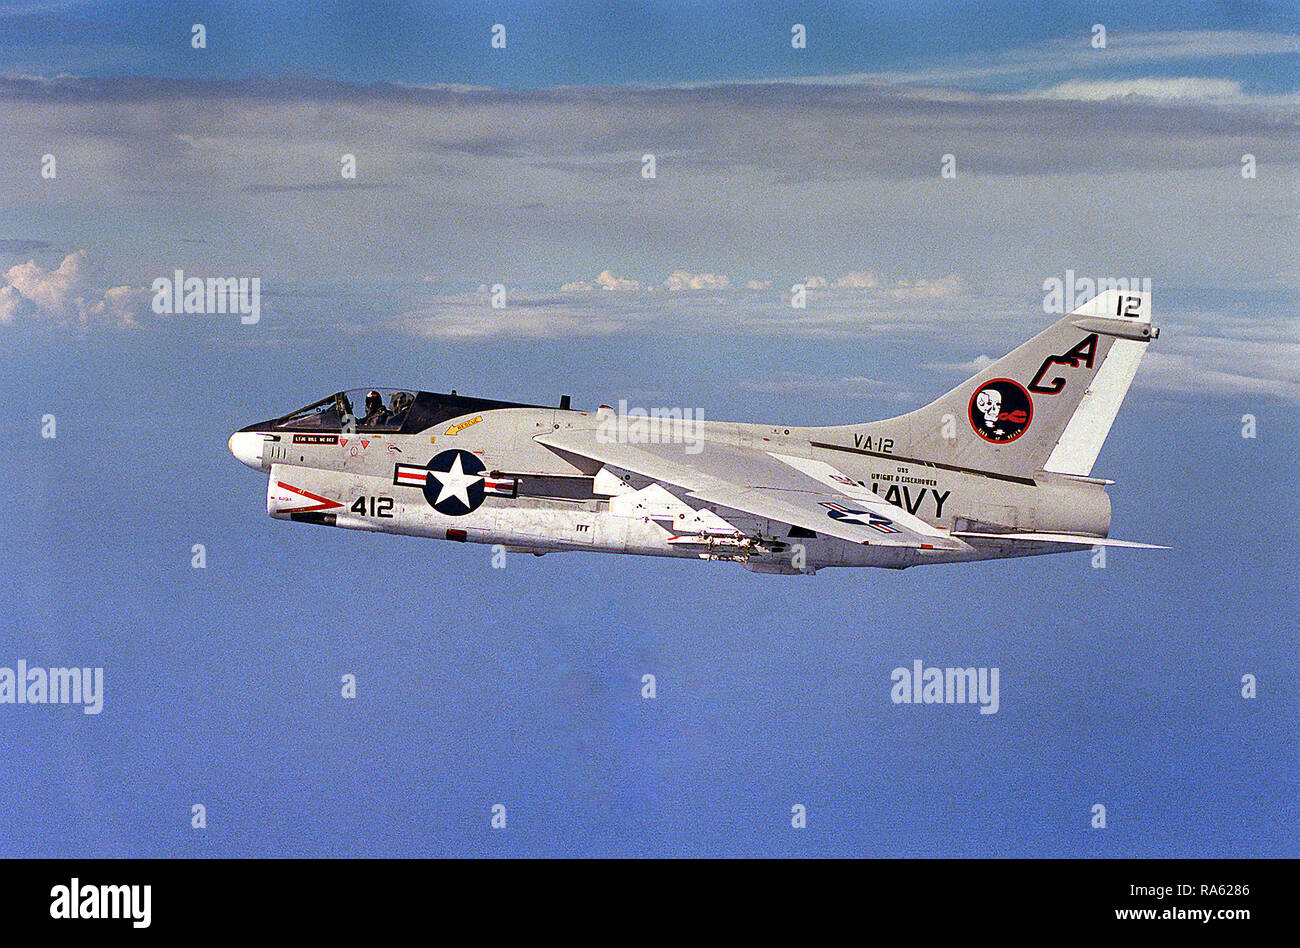 1978 - An air-to-air left side view of an Attack Squadron 12 (VA-12) A-7E Corsair II aircraft. Stock Photo